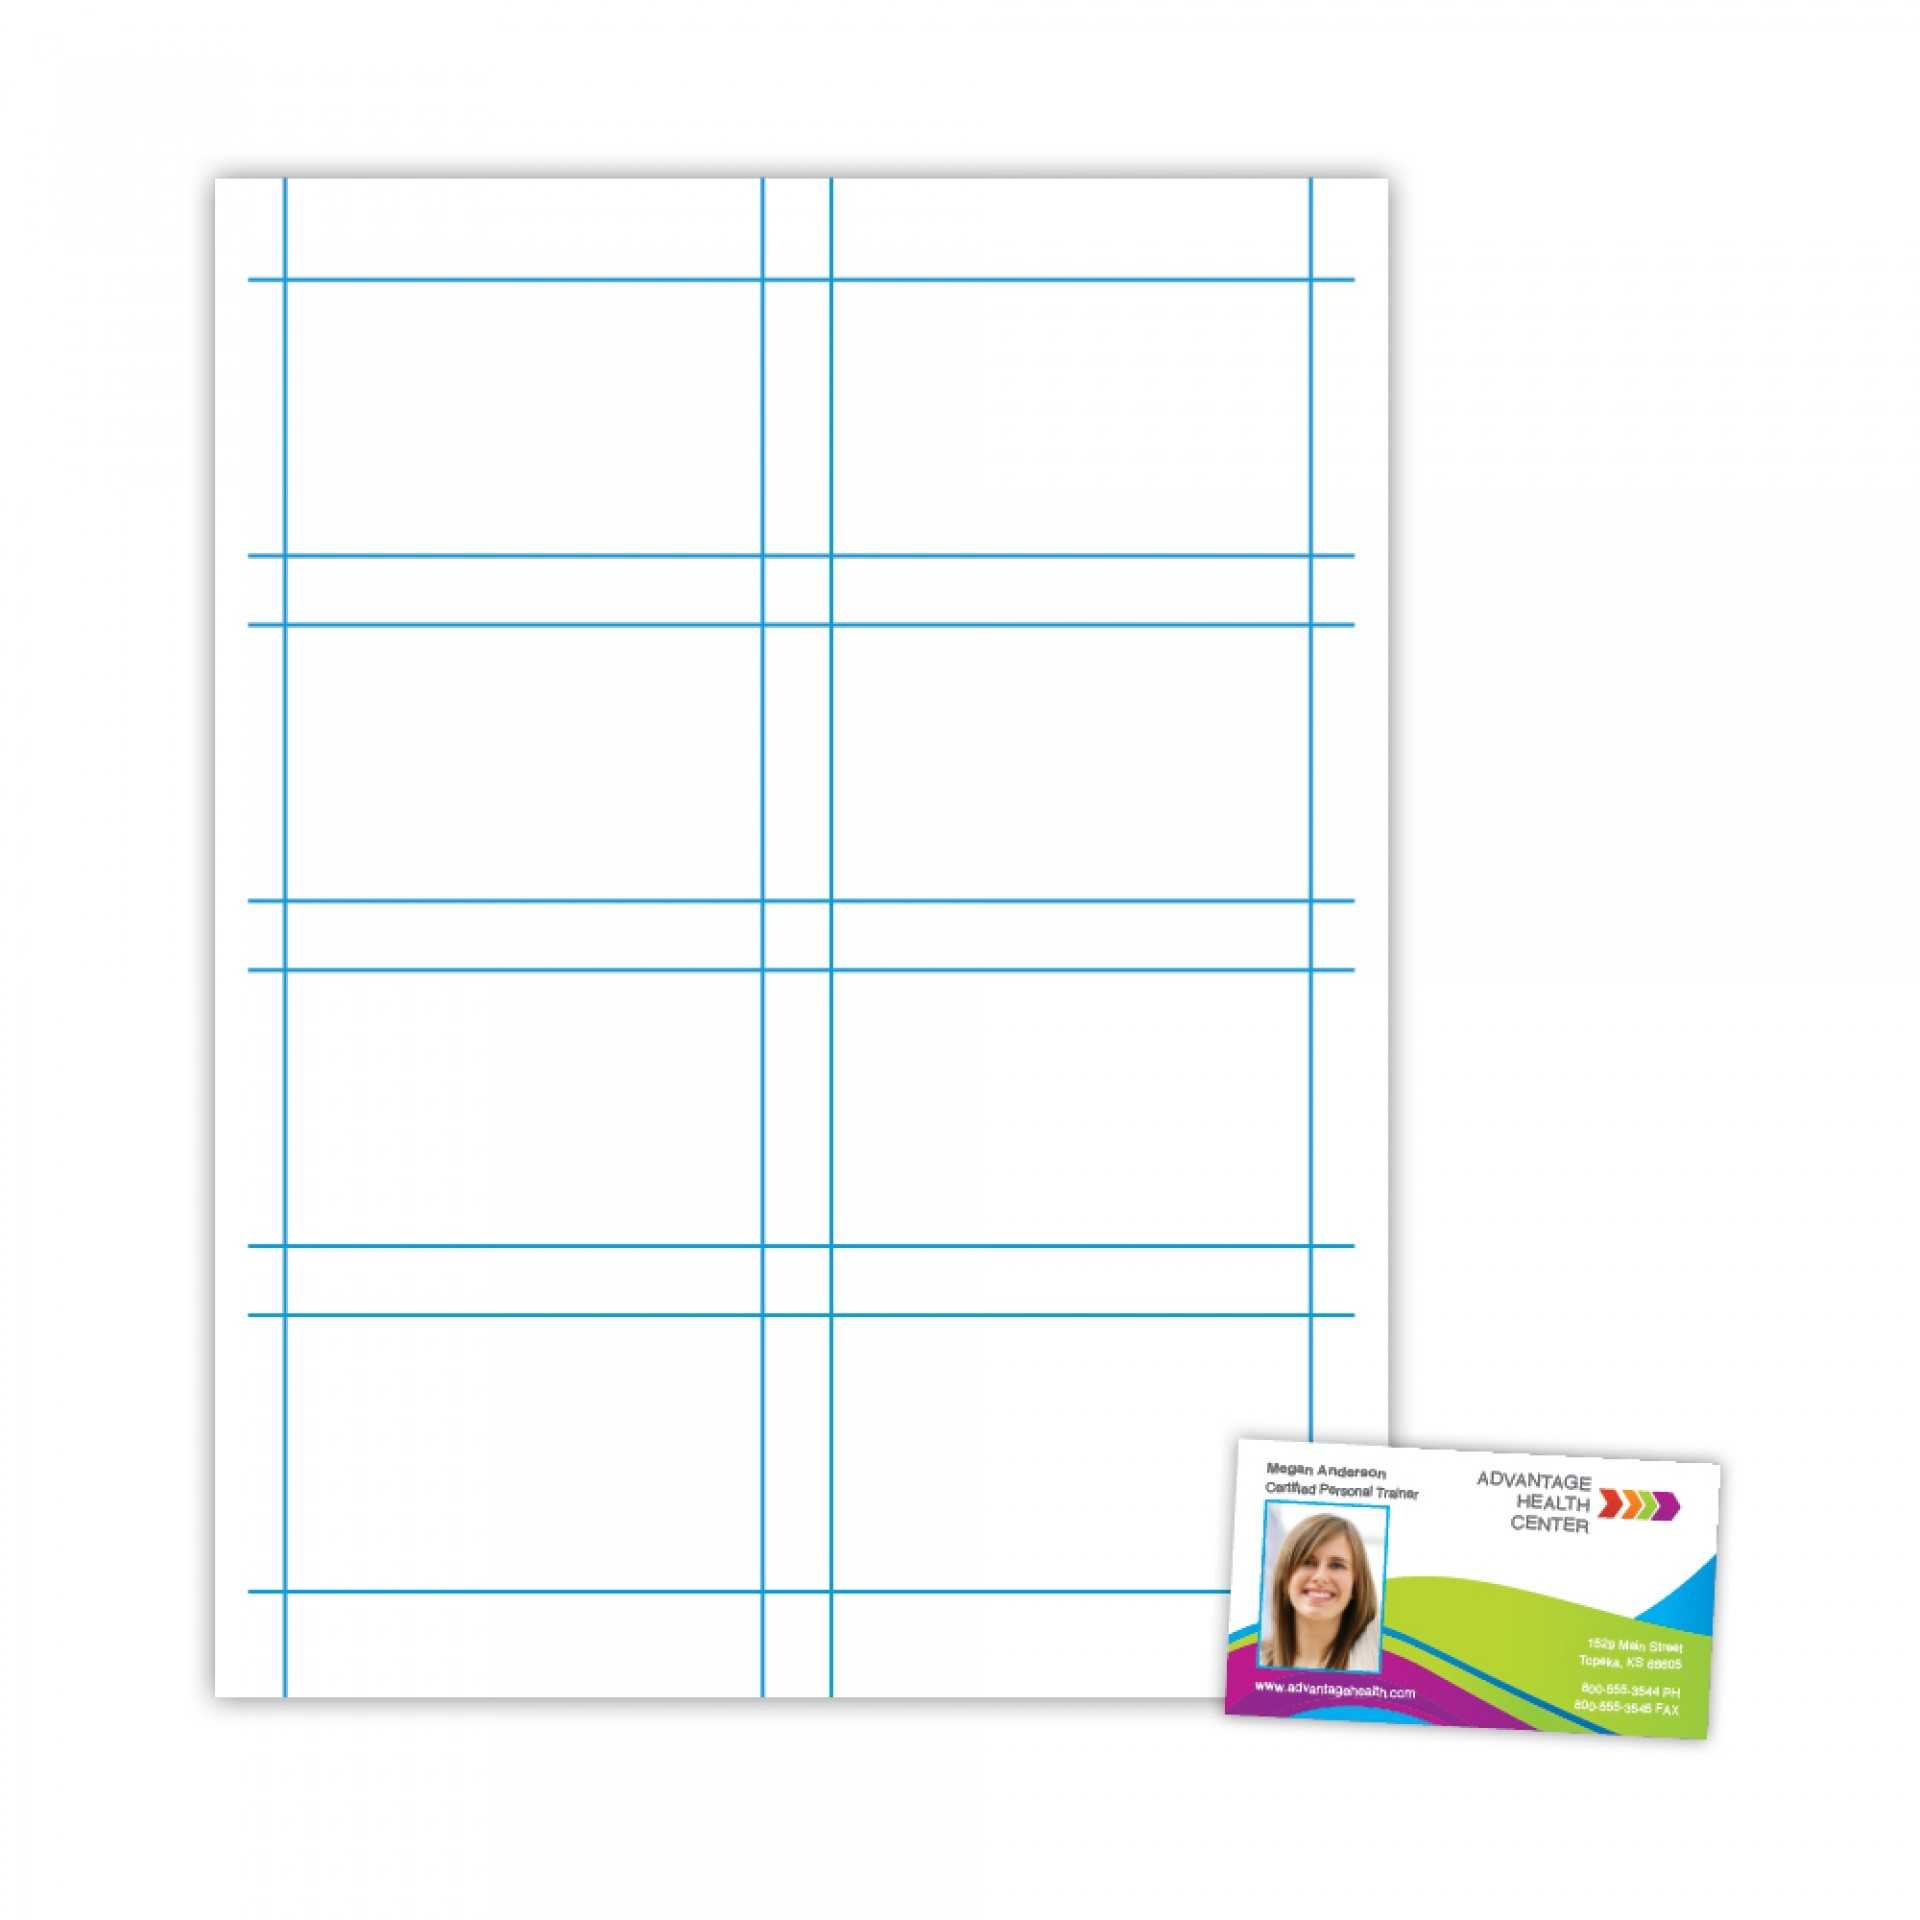 025 Plain Business Card Template Blank Microsoft Word Free With Regard To Blank Business Card Template Microsoft Word